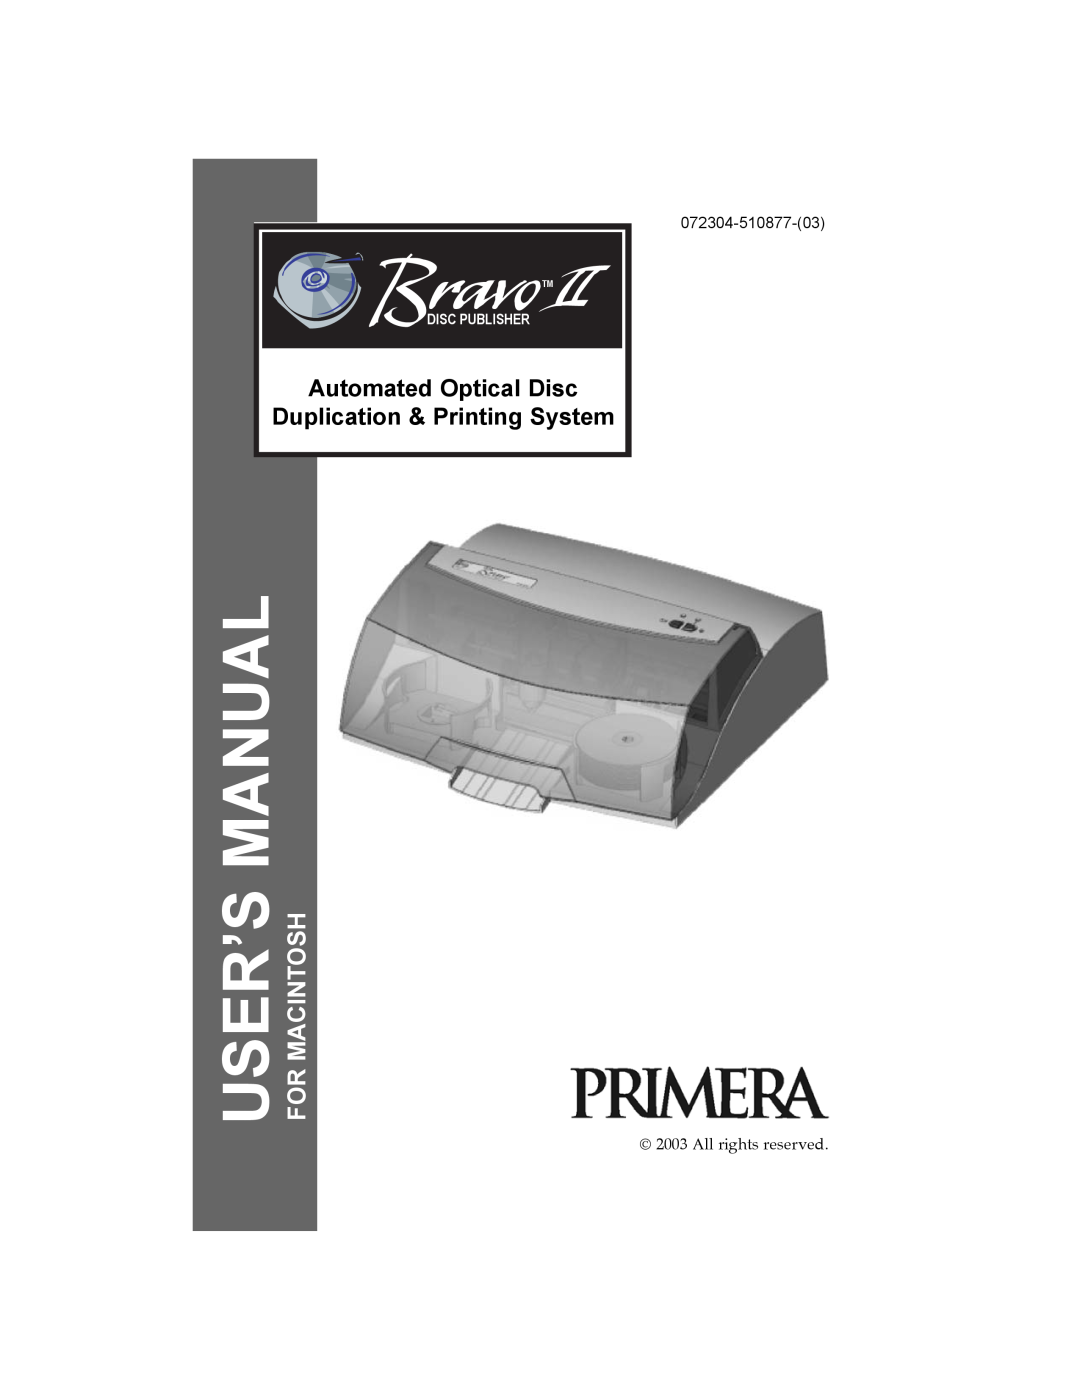 Primera Technology II user manual For Macintosh, System, AutoAutomatedt Opticali Disc, Duplicationupli ti & Printingi 